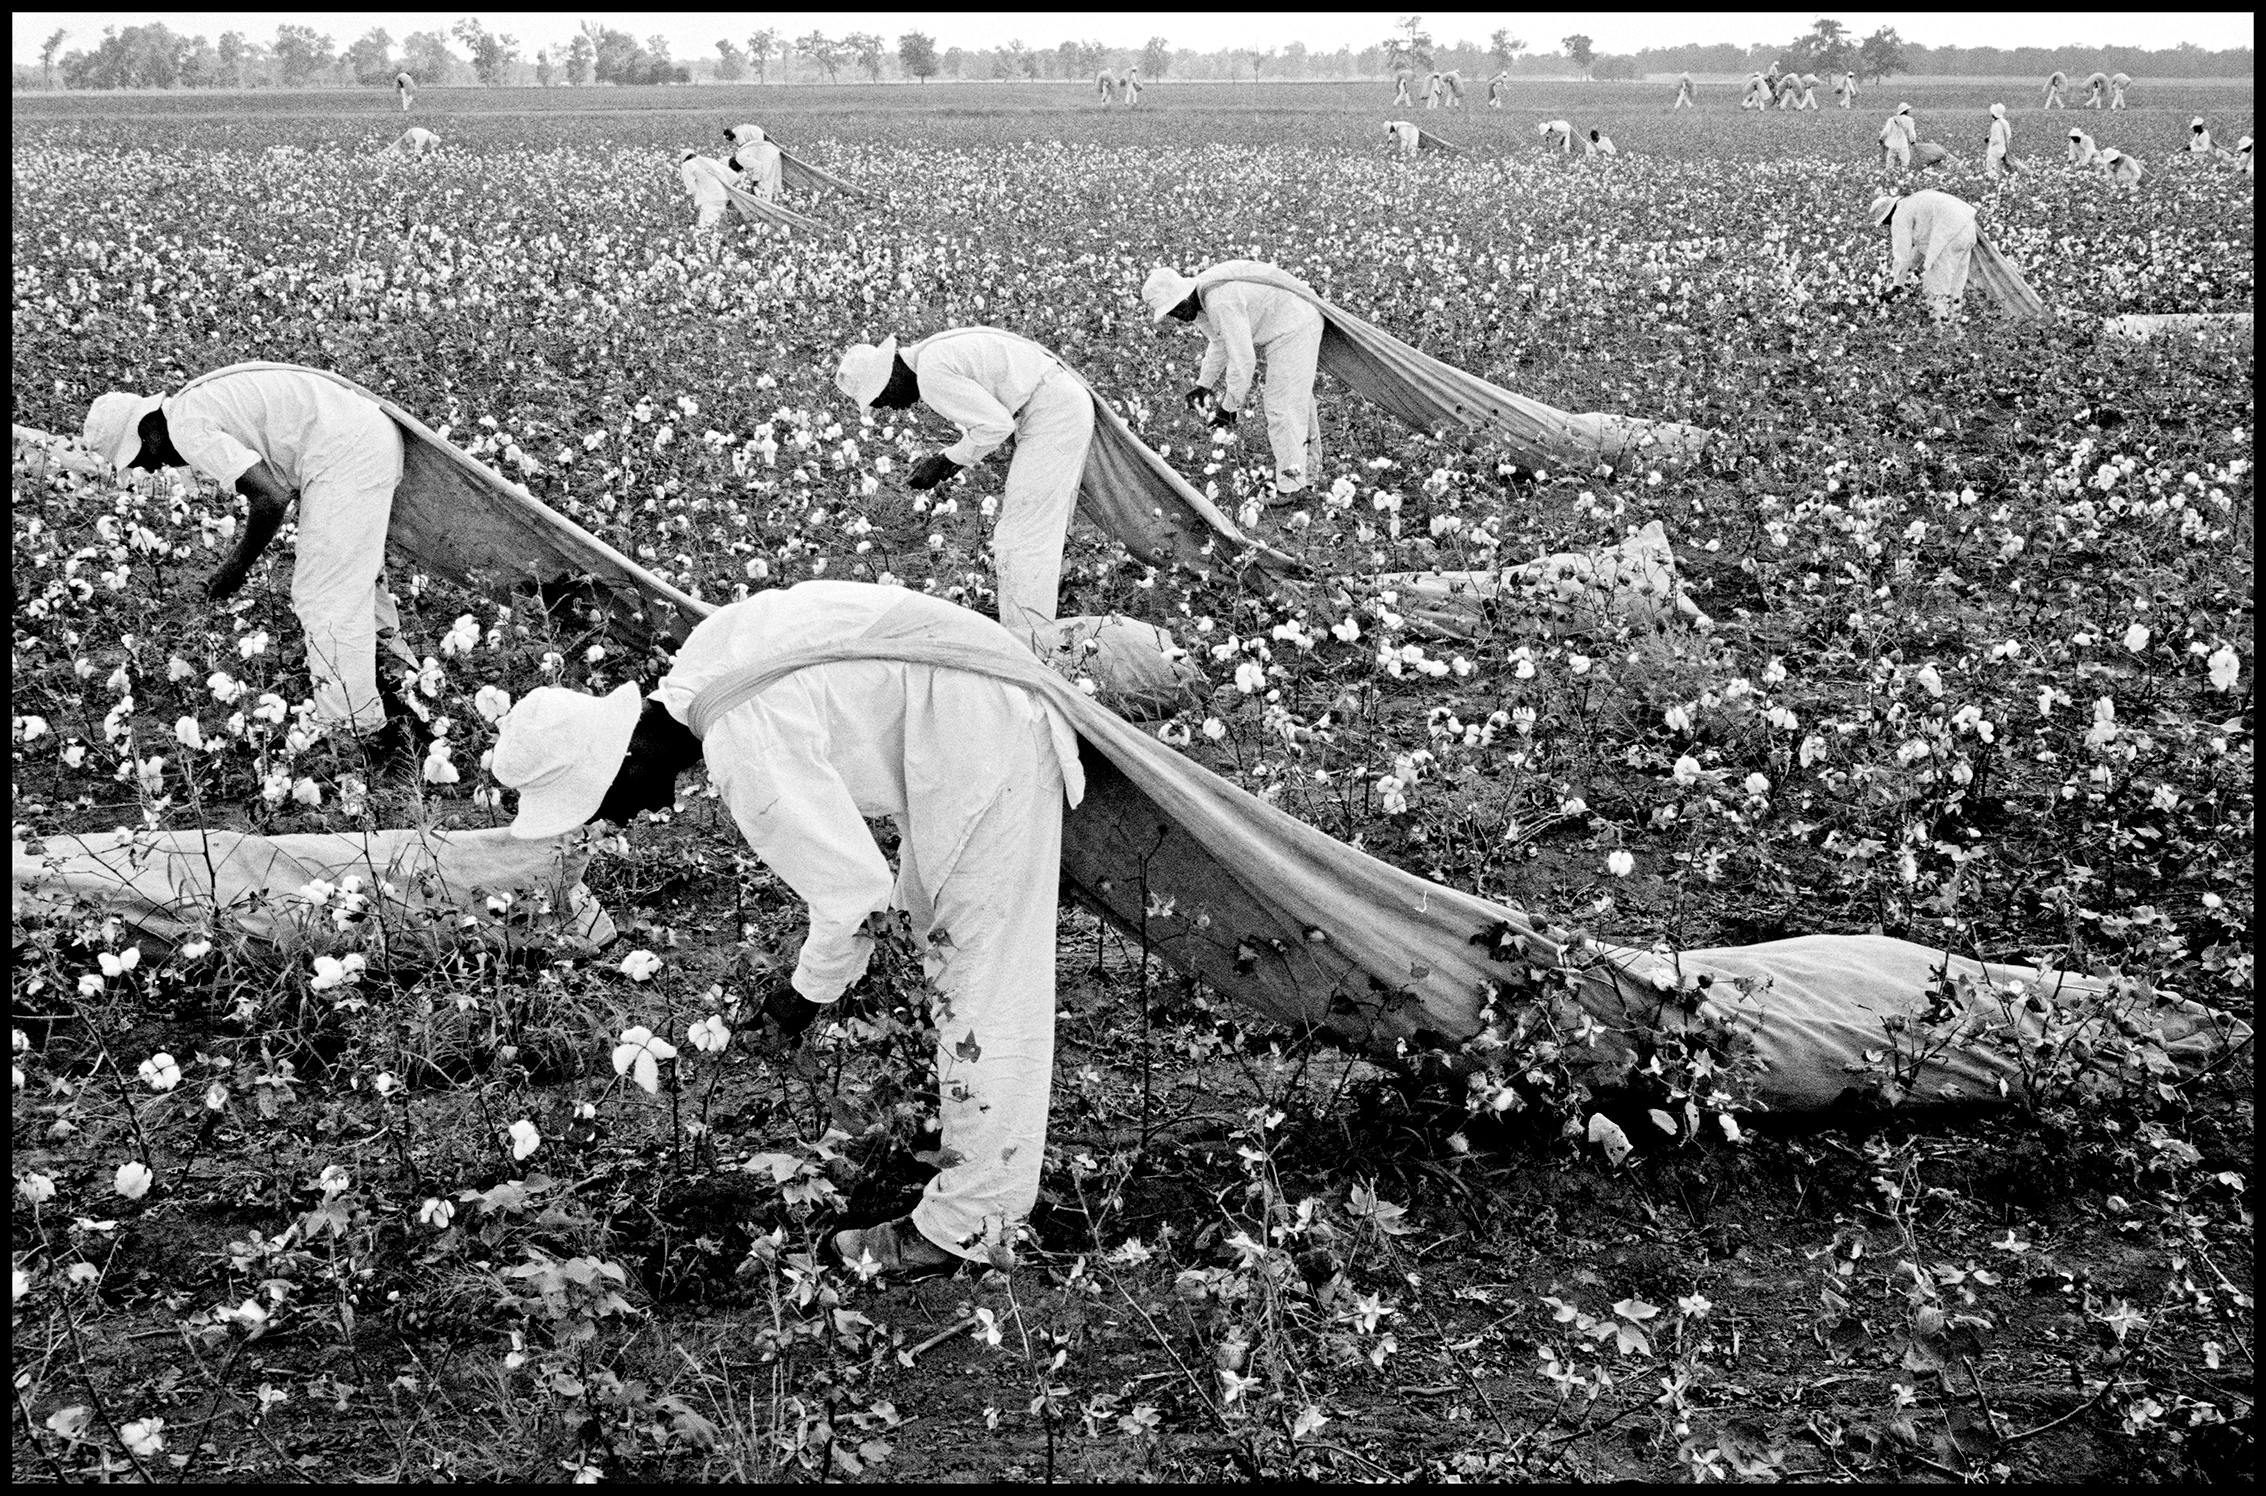 Prisoners picking cotton in Huntsville in 1968.